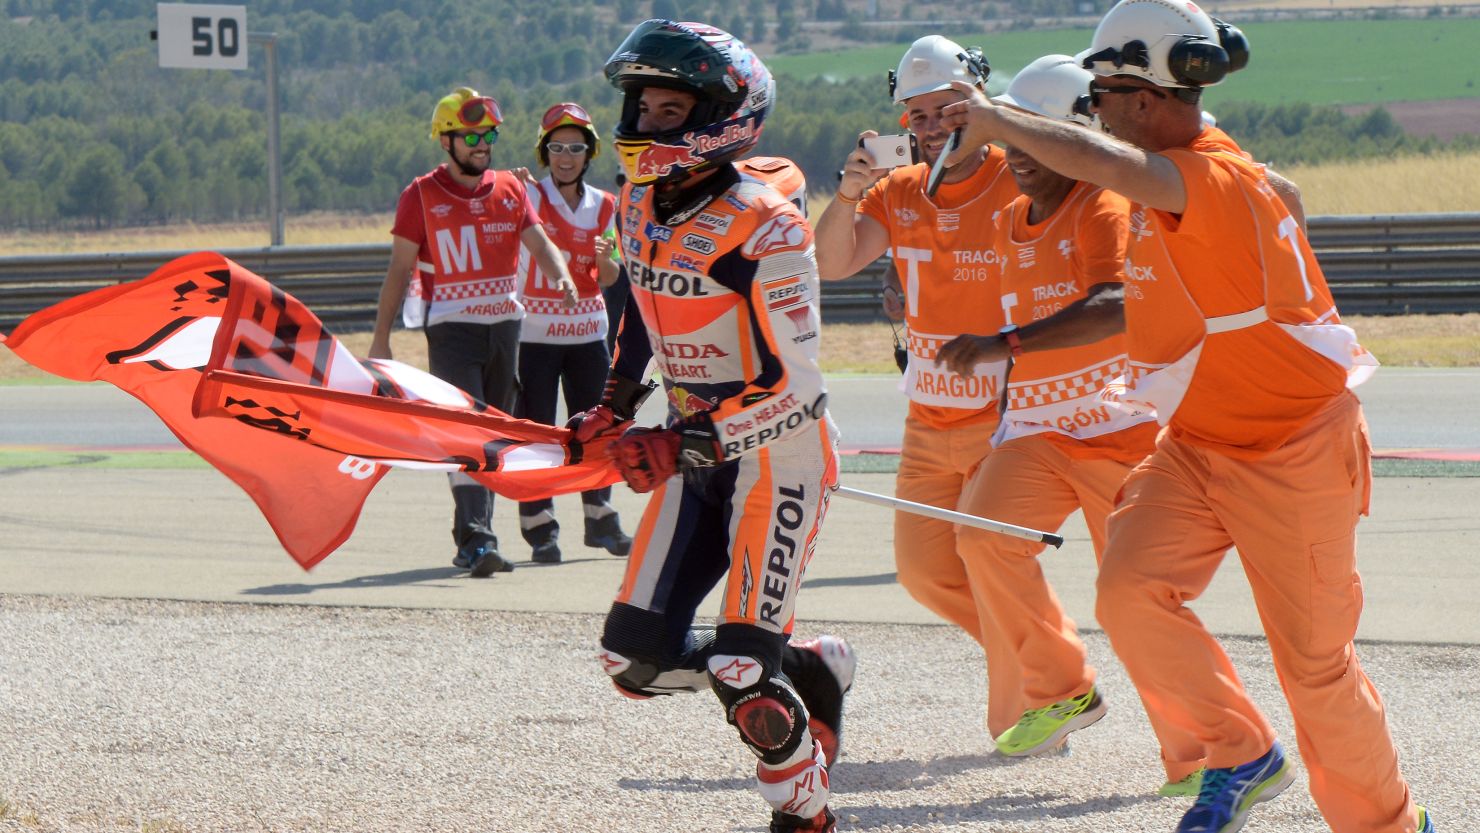 Marc Marquez celebrates his Aragon MotGP win with marshals at the Motorland track in Alcaniz.